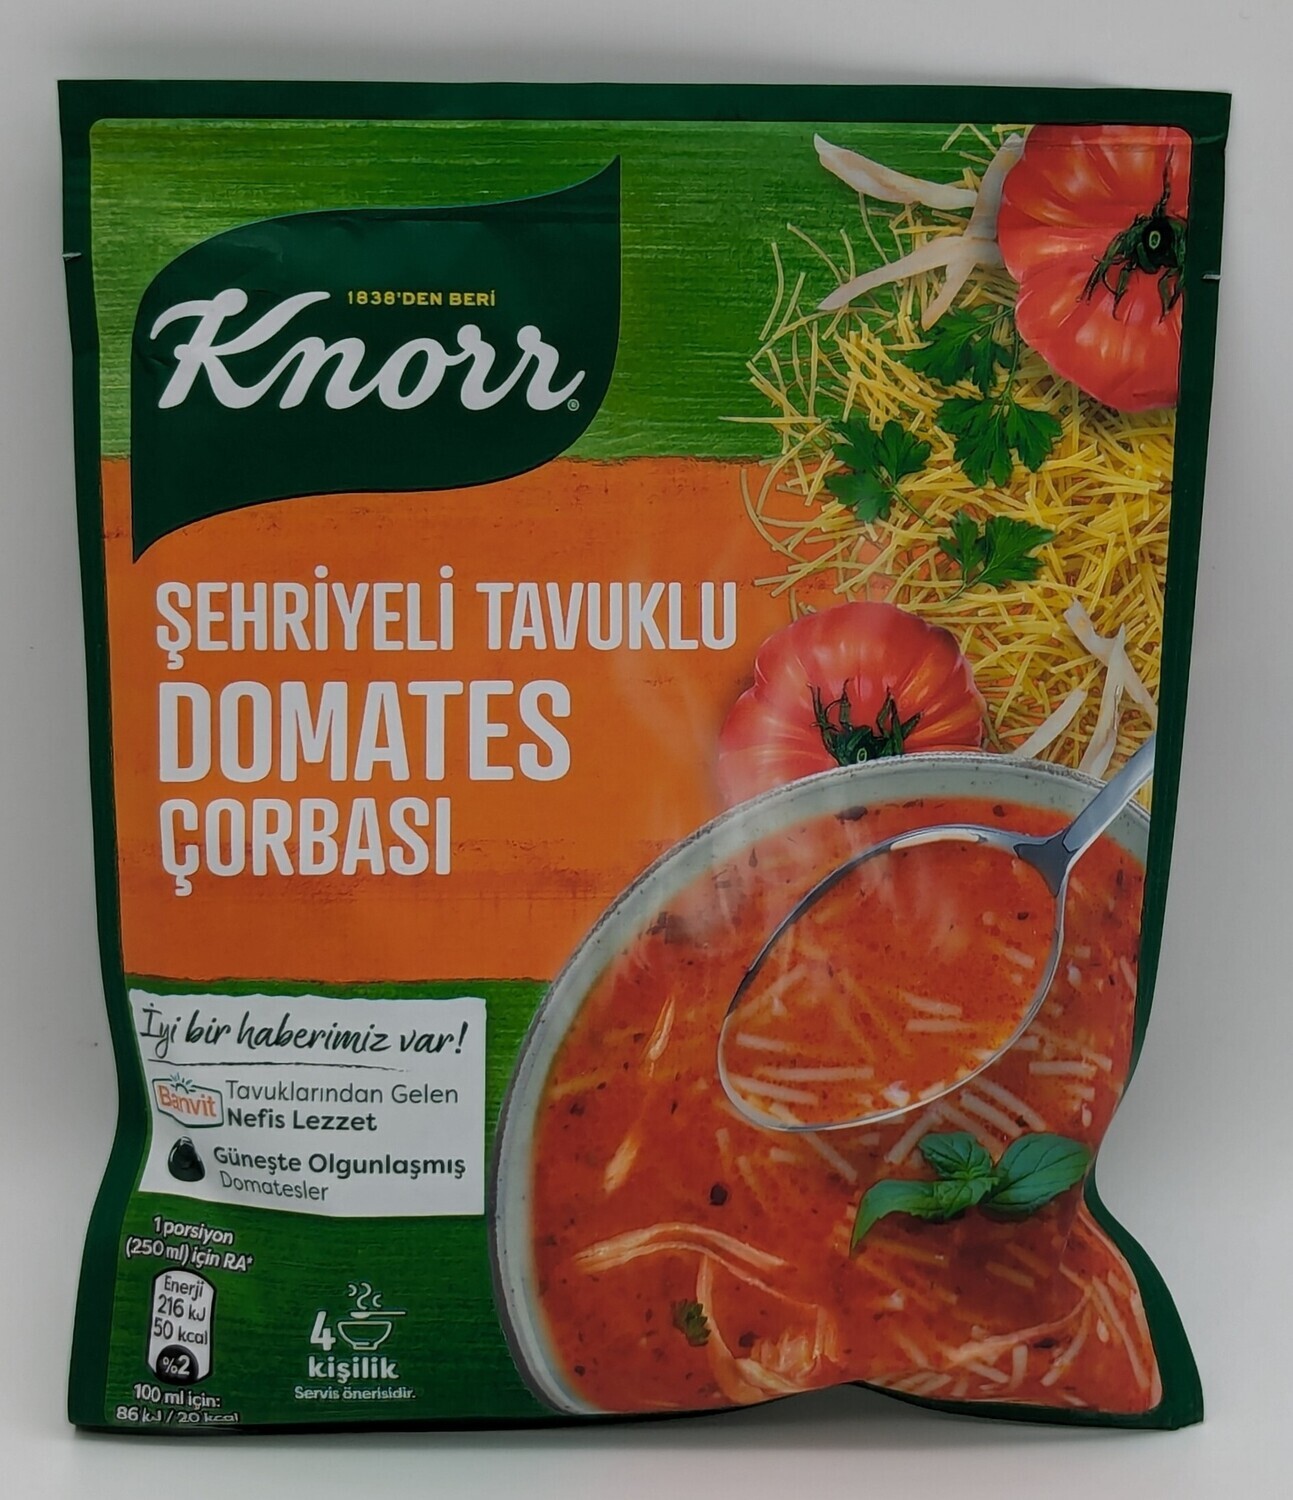 KNORR Chicken Tomato Noodle Soup - Sehriyeli Tavuklu Domates Corbasi 67g